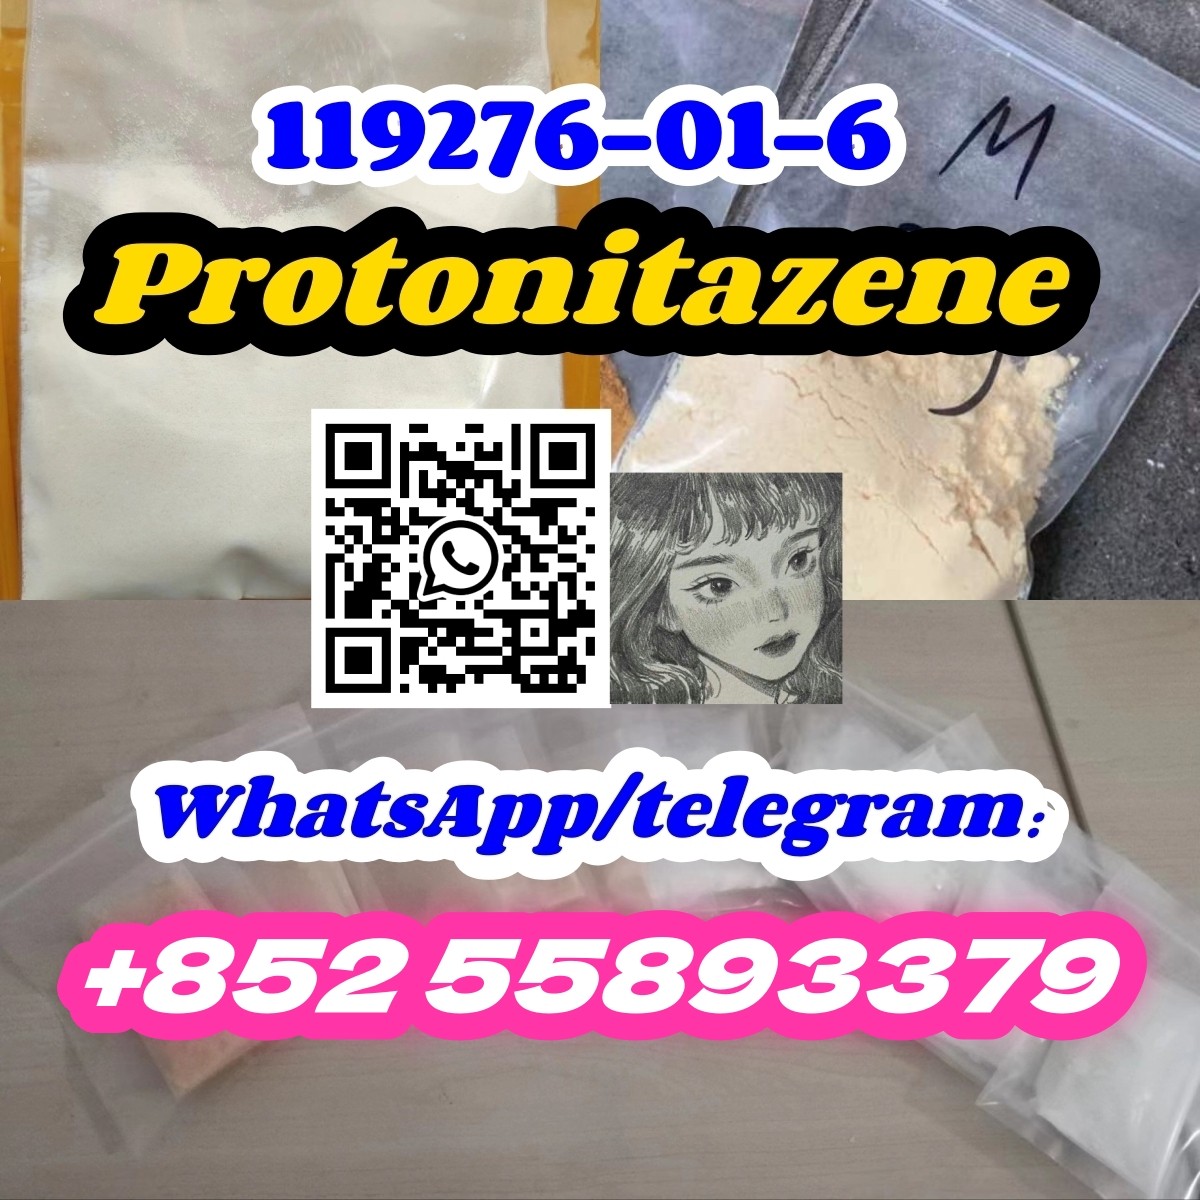 Protonitazene 119276-01-6 opioid